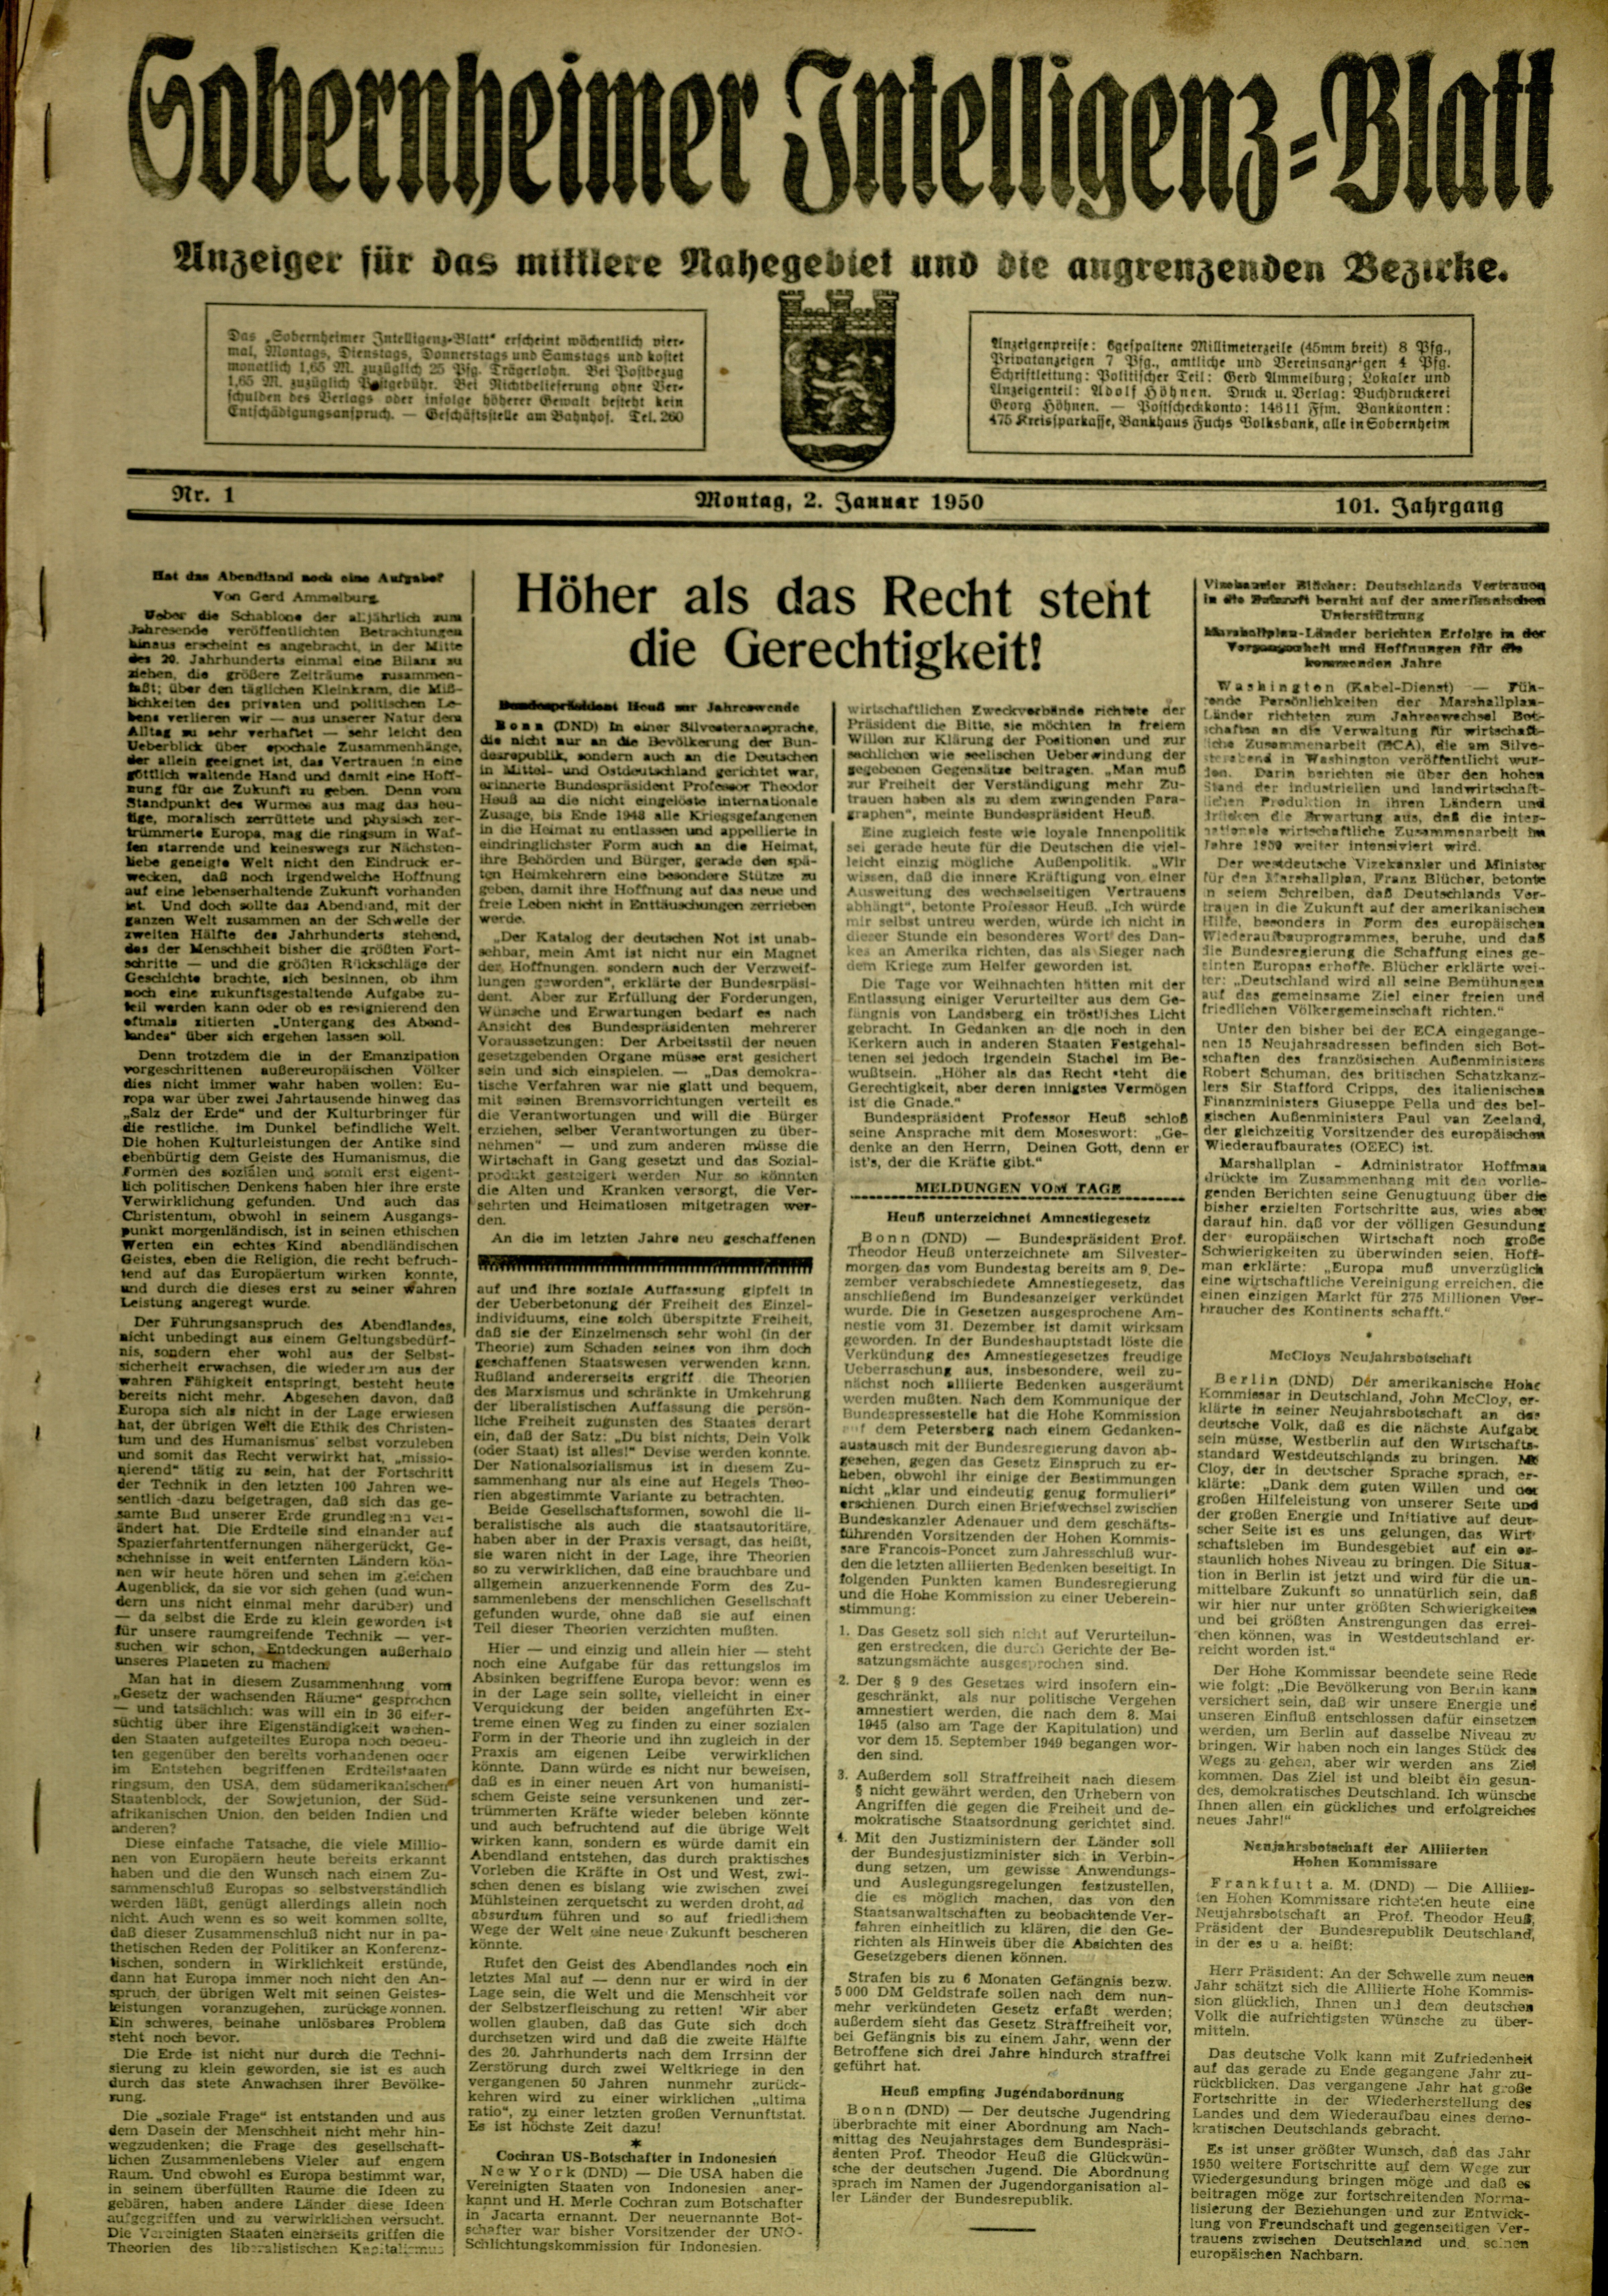 Zeitung: Sobernheimer Intelligenzblatt; Januar 1950, Jg. 82 Nr. 1 (Heimatmuseum Bad Sobernheim CC BY-NC-SA)